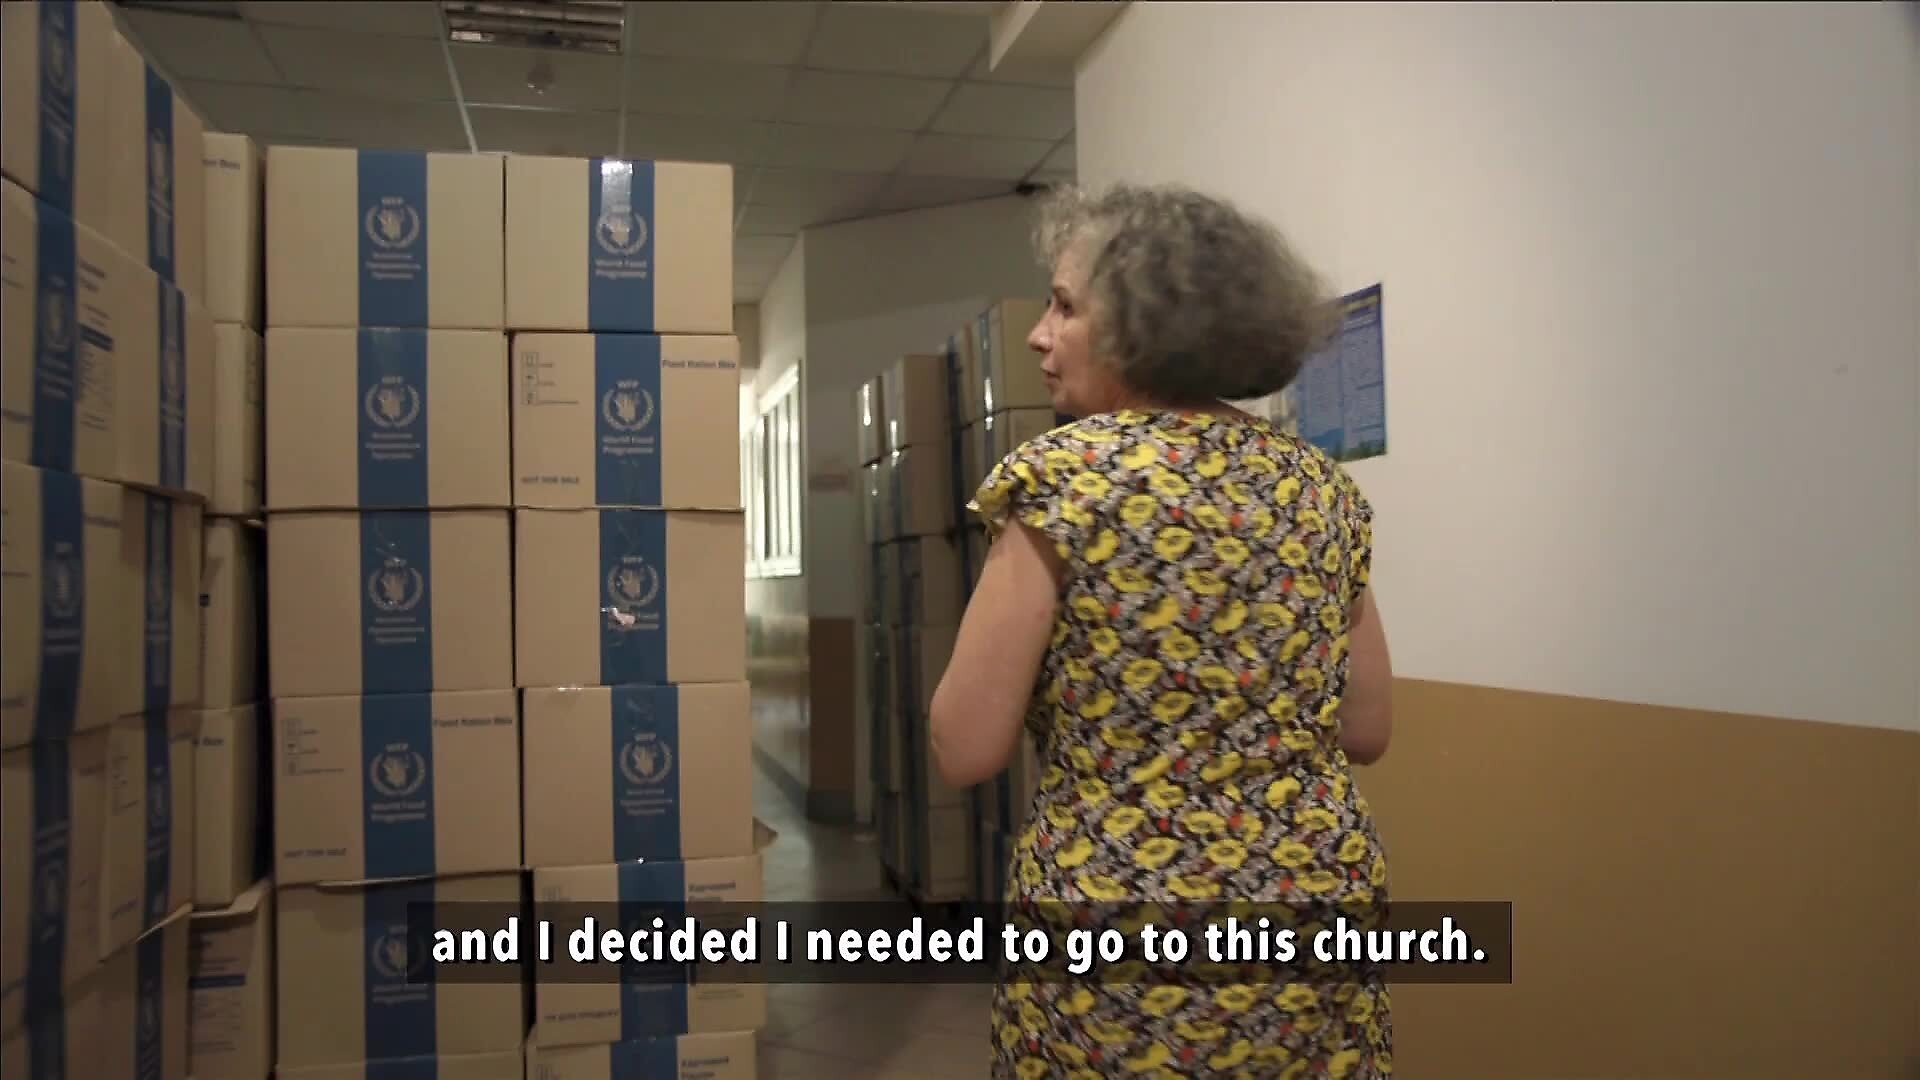 Ukraine: Finding God in Crisis